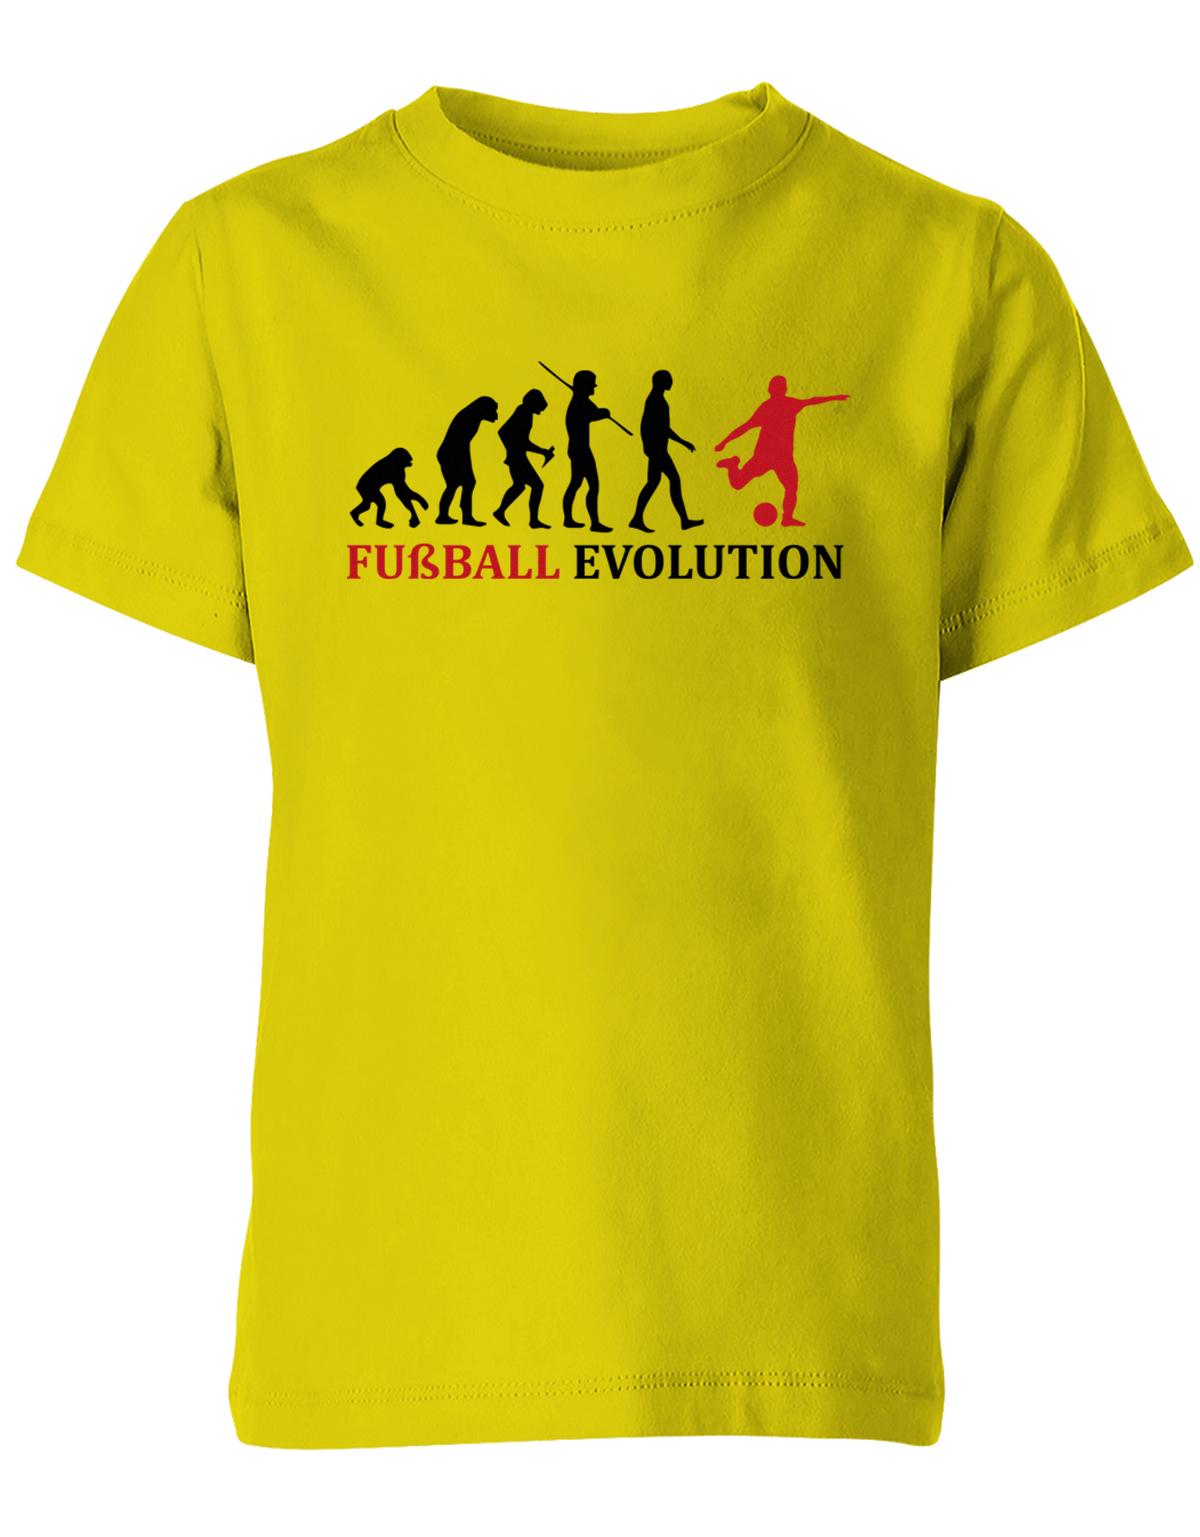 Fussball-Evolution-Kinder-Shirt-Gelb-Rot